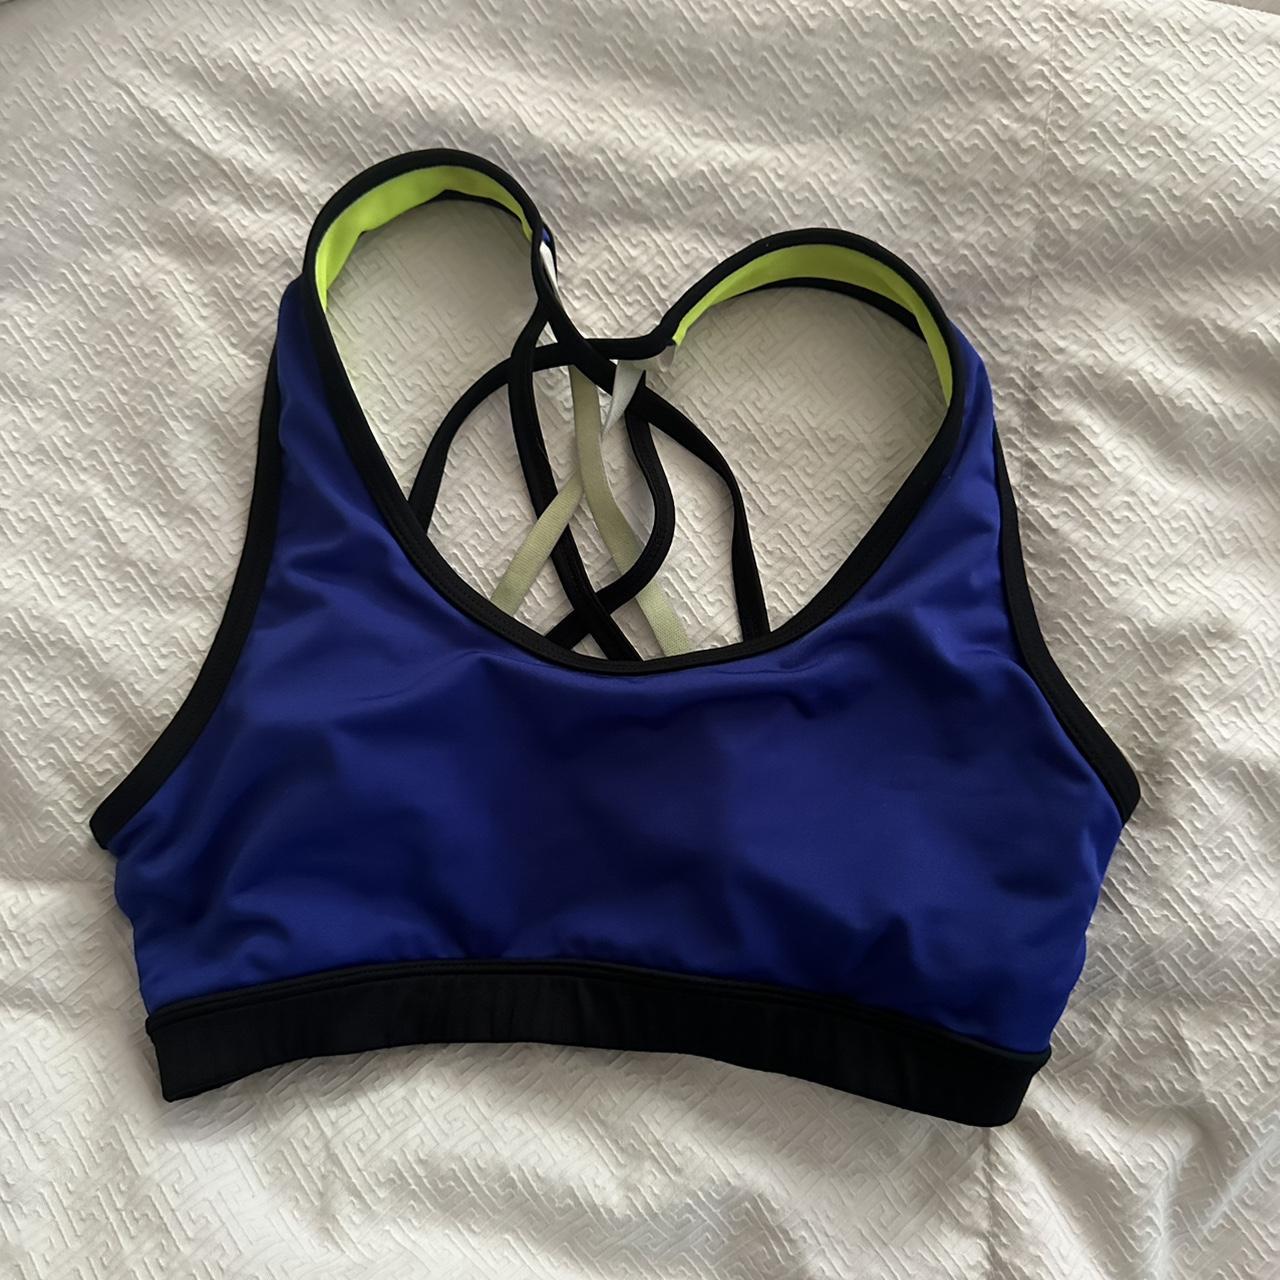 blue and neon green sports bra - Depop